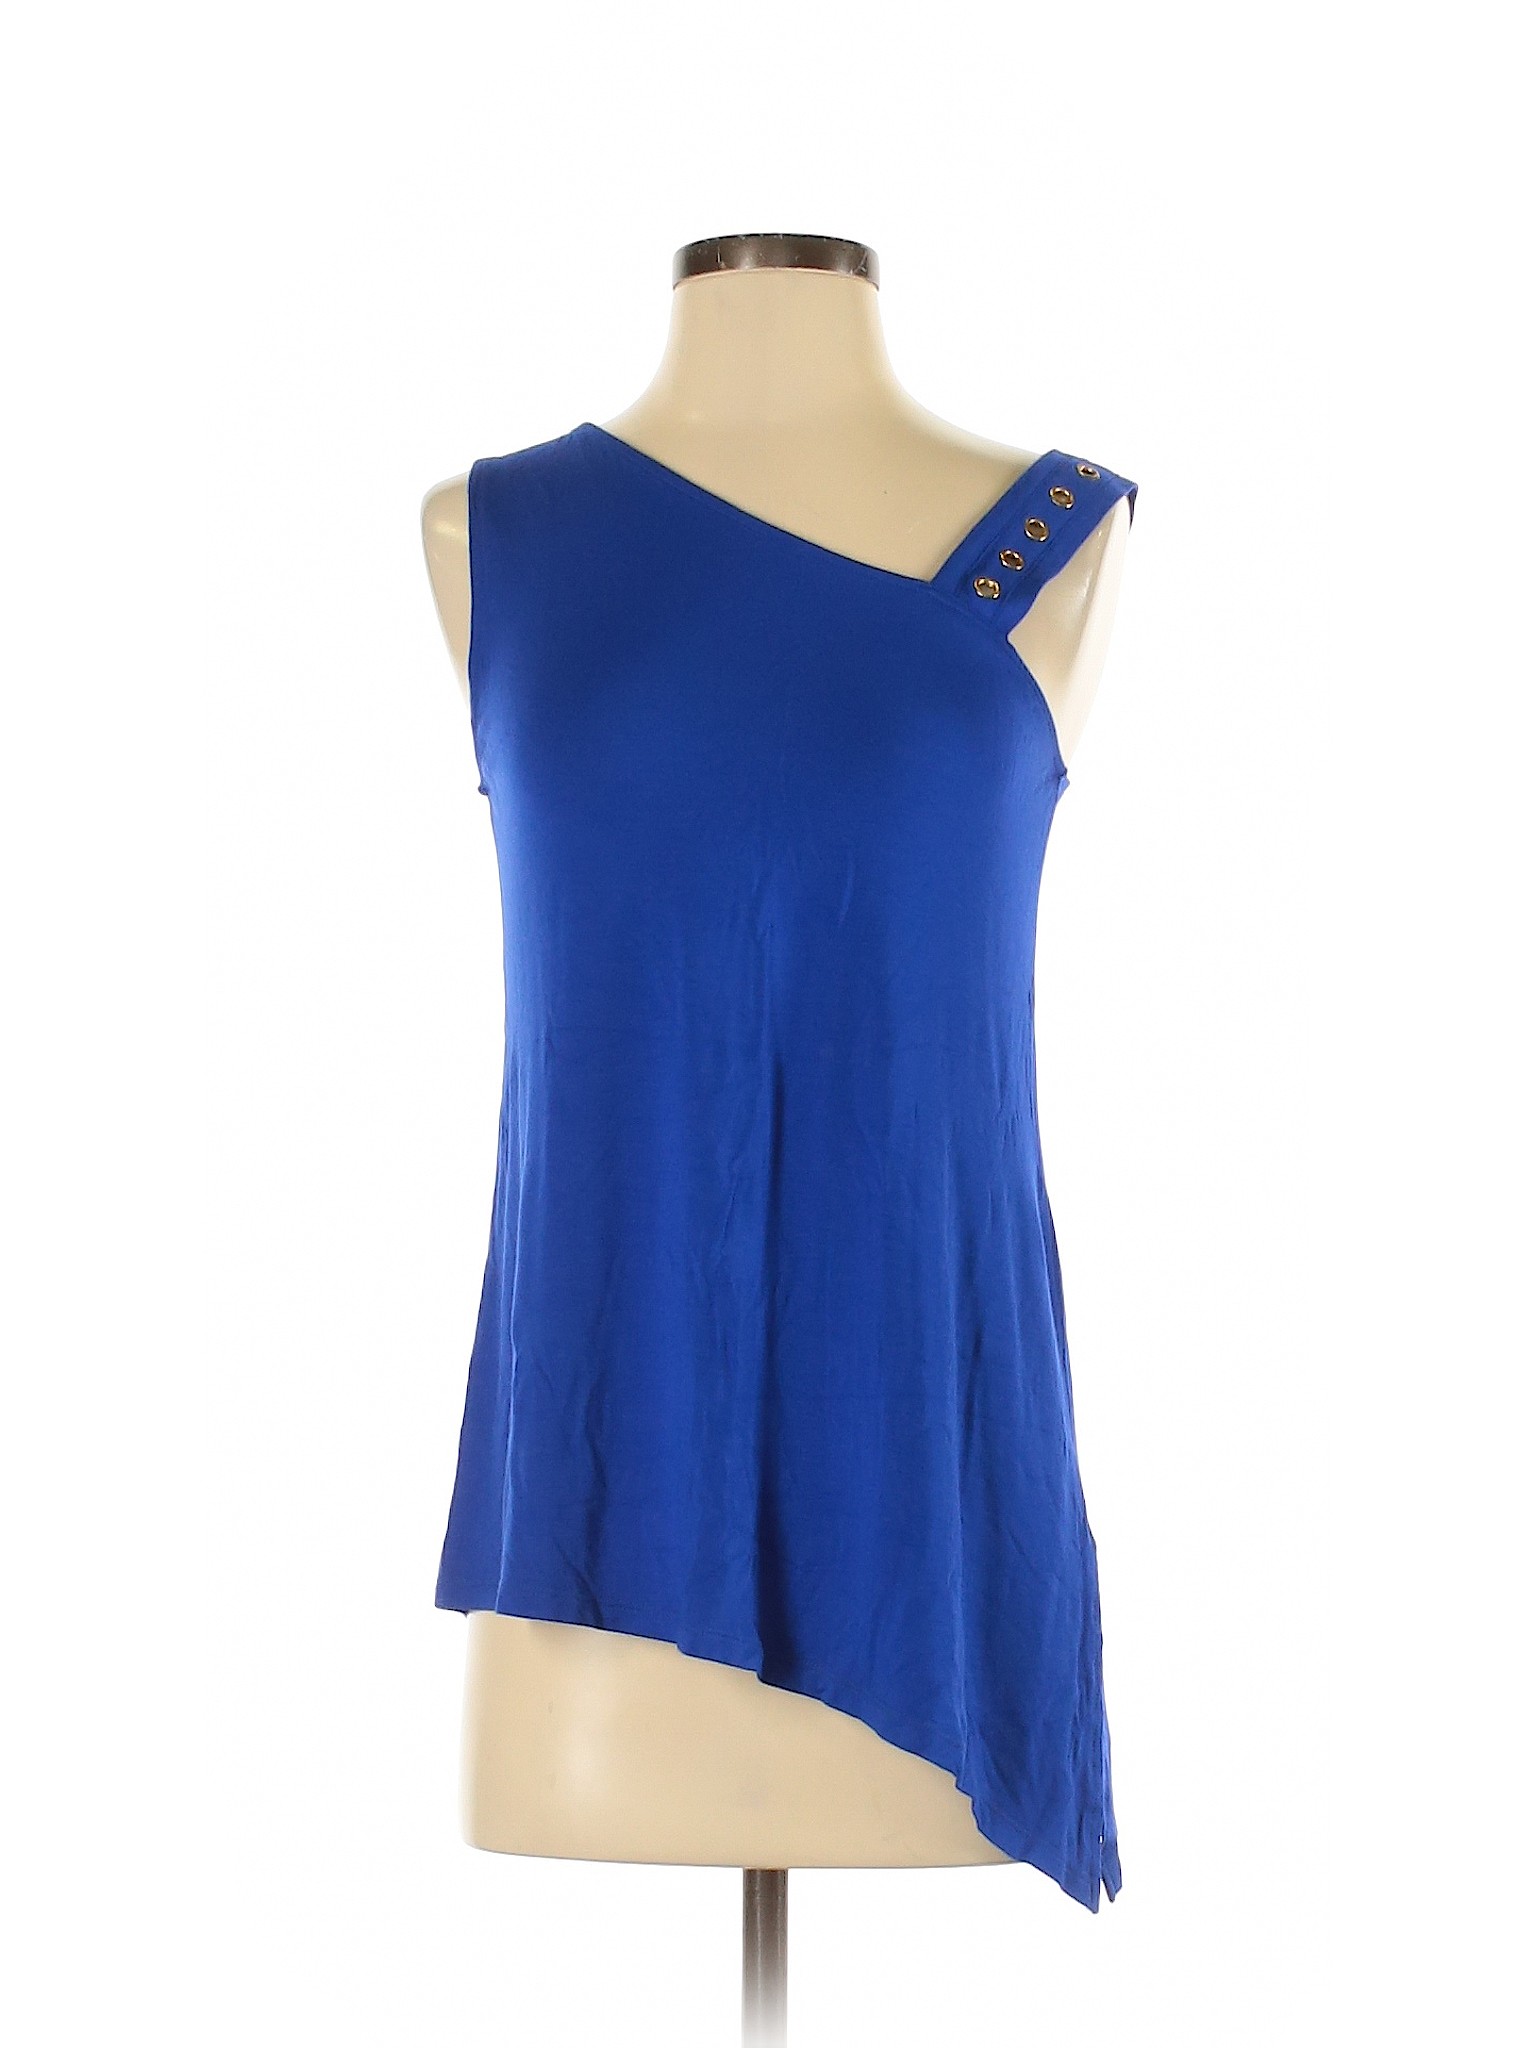 Cable & Gauge Women Blue Sleeveless Top S | eBay